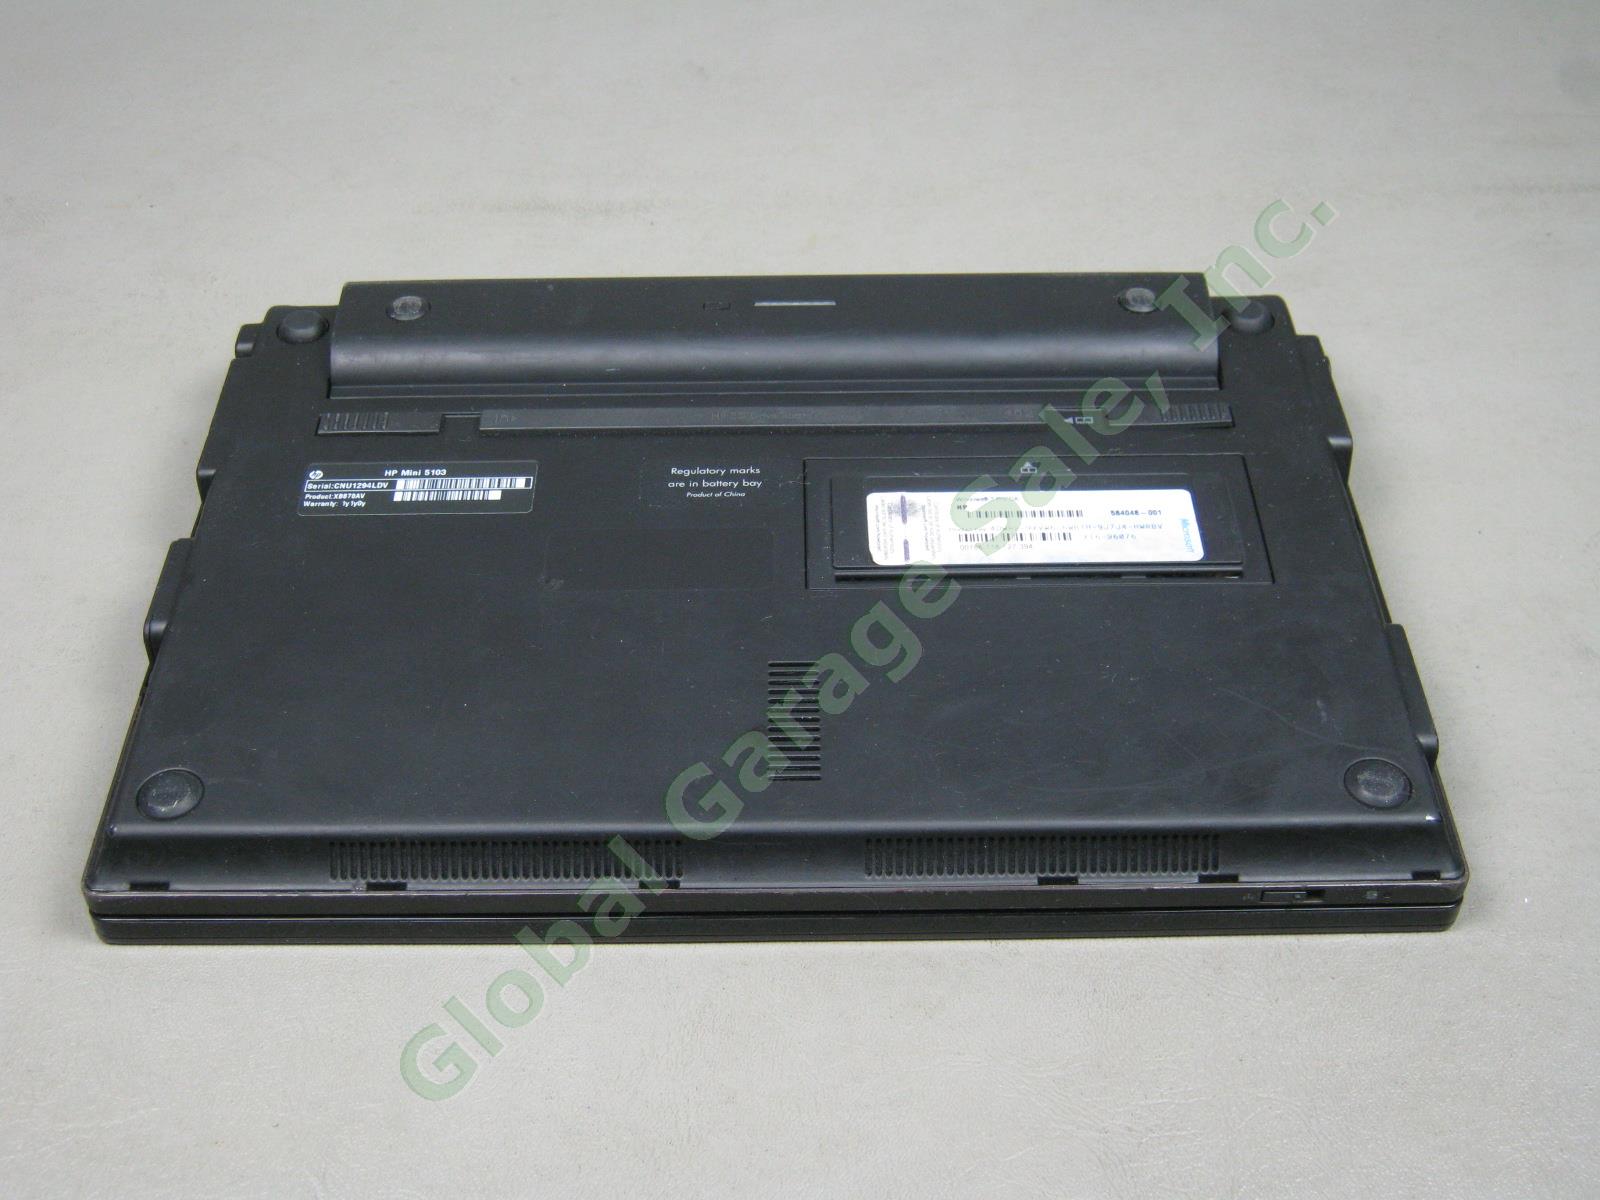 HP Mini 5103 10.1" Netbook Laptop Intel Atom 1.83GHz 2GB RAM 160GB HDD Windows 7 8